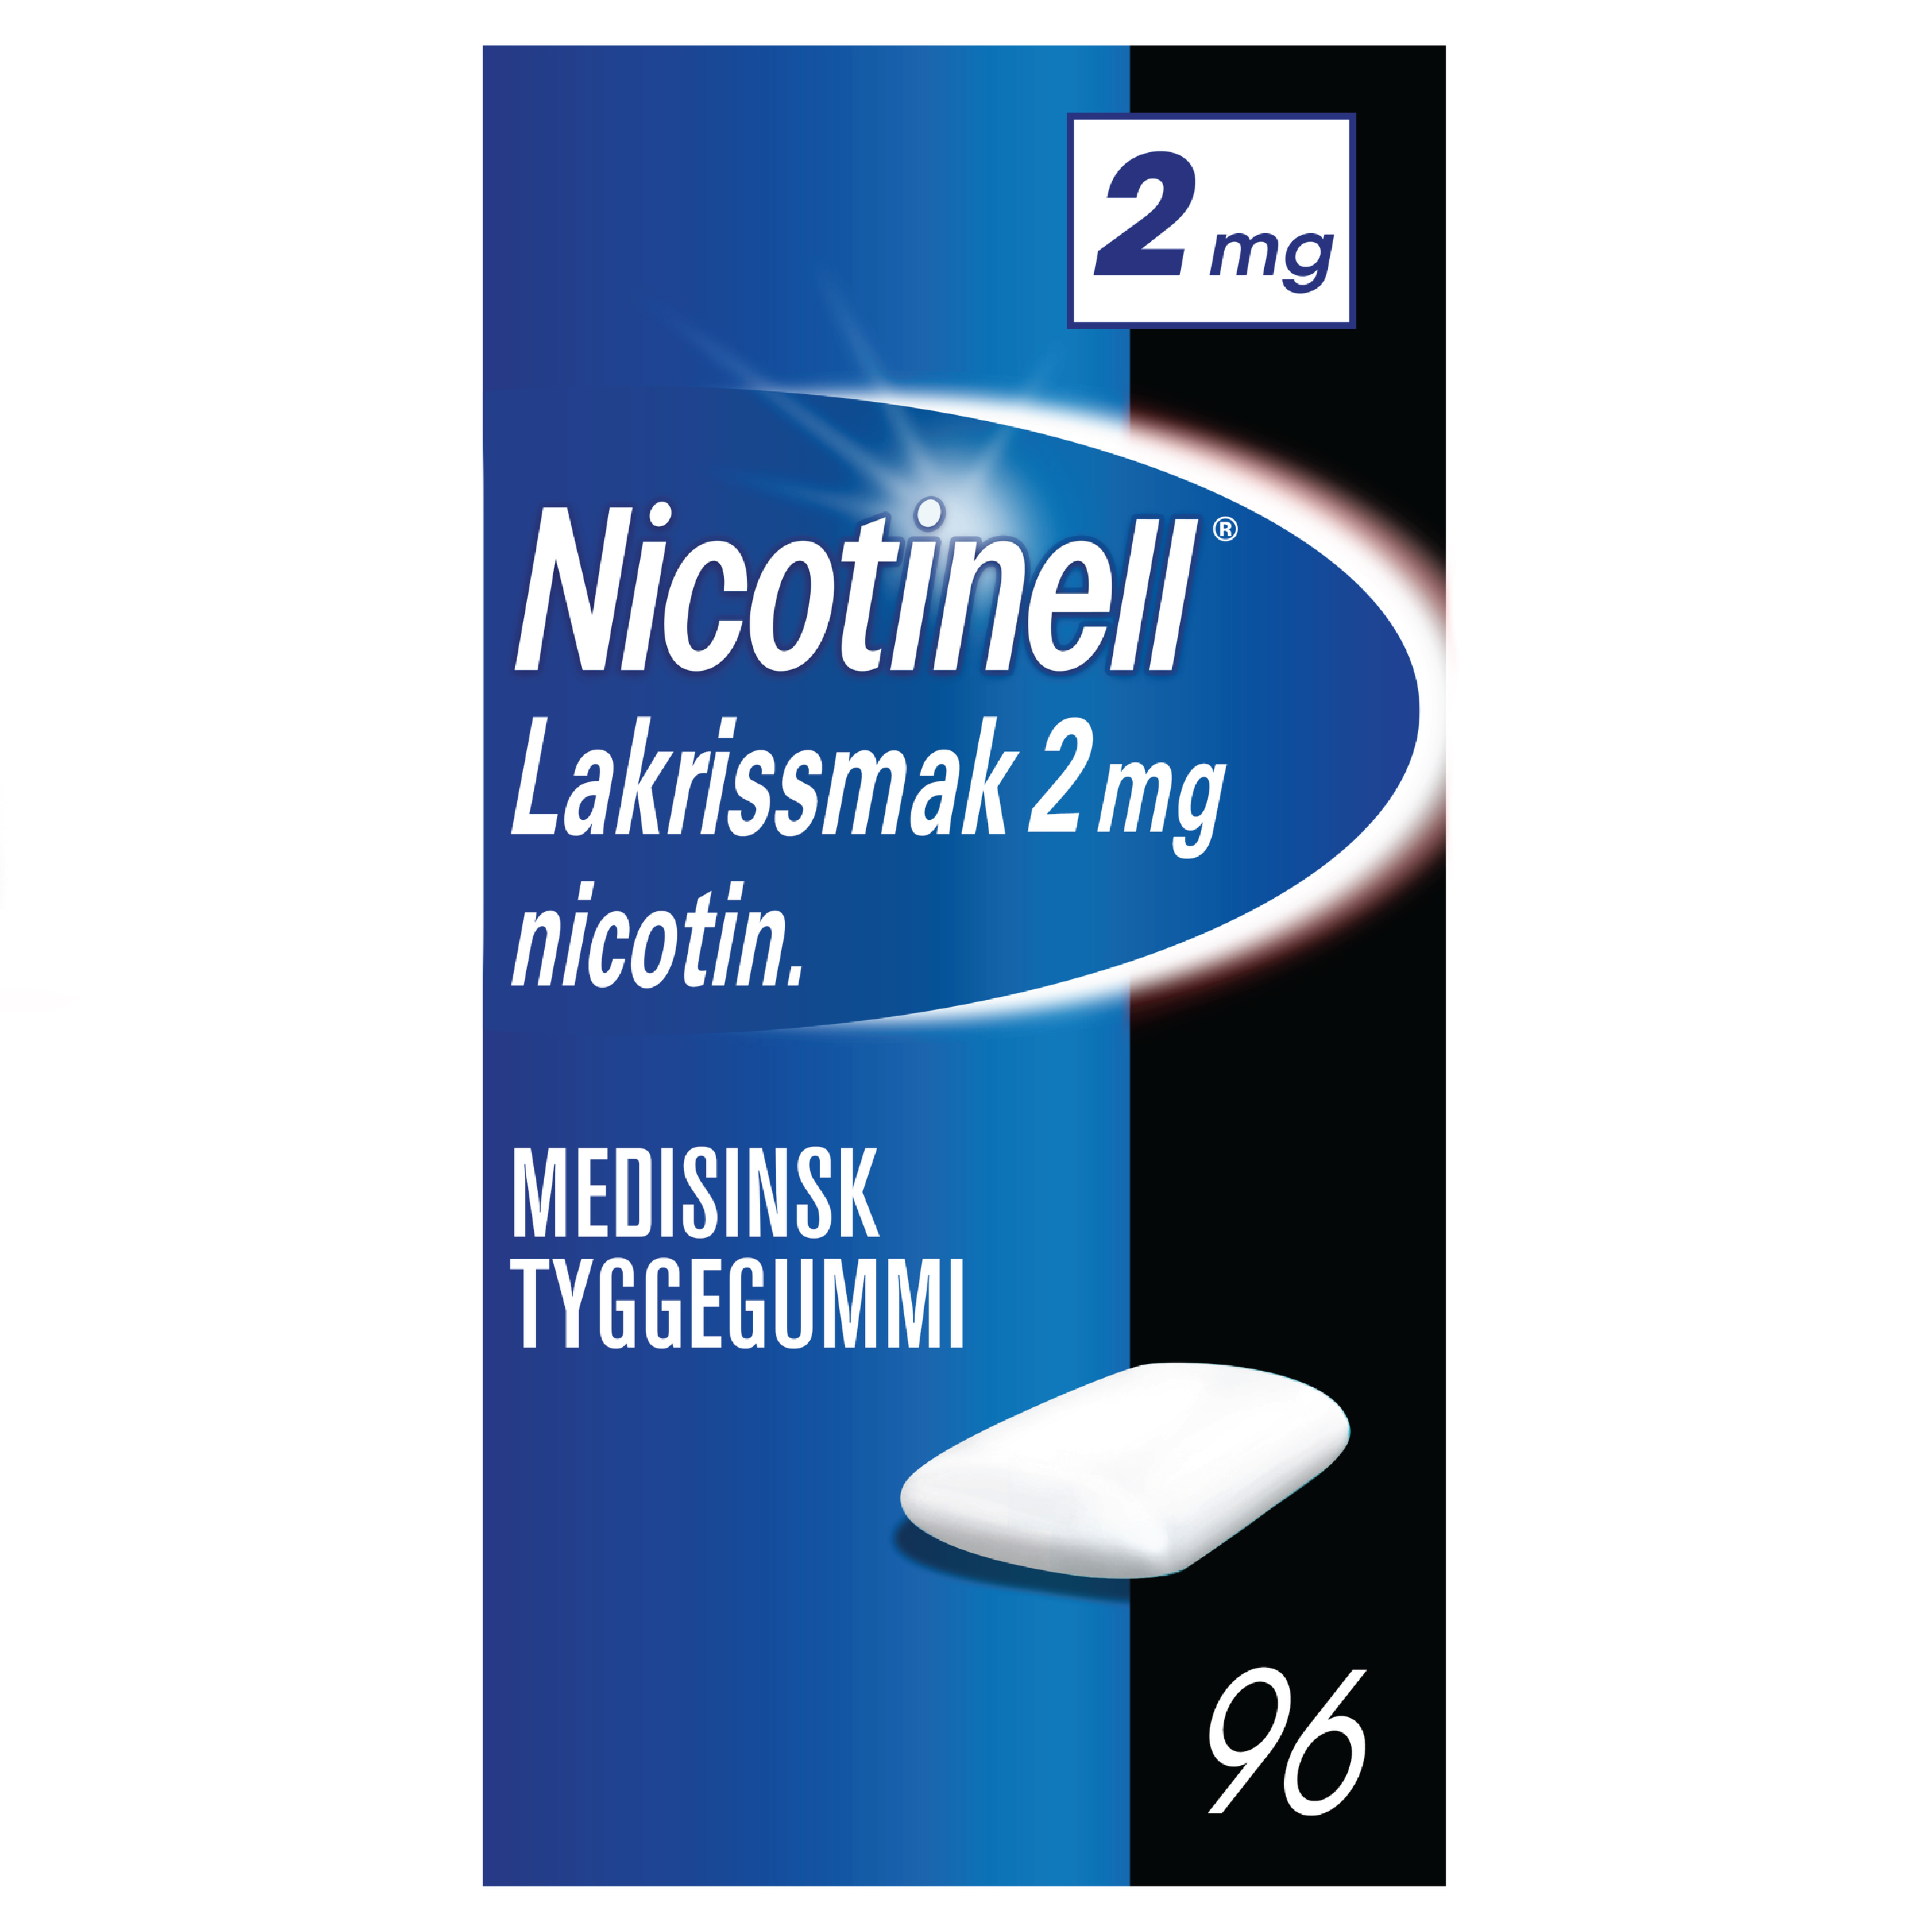 Nicotinell Tyggegummi 2mg lakris, 96 stk.